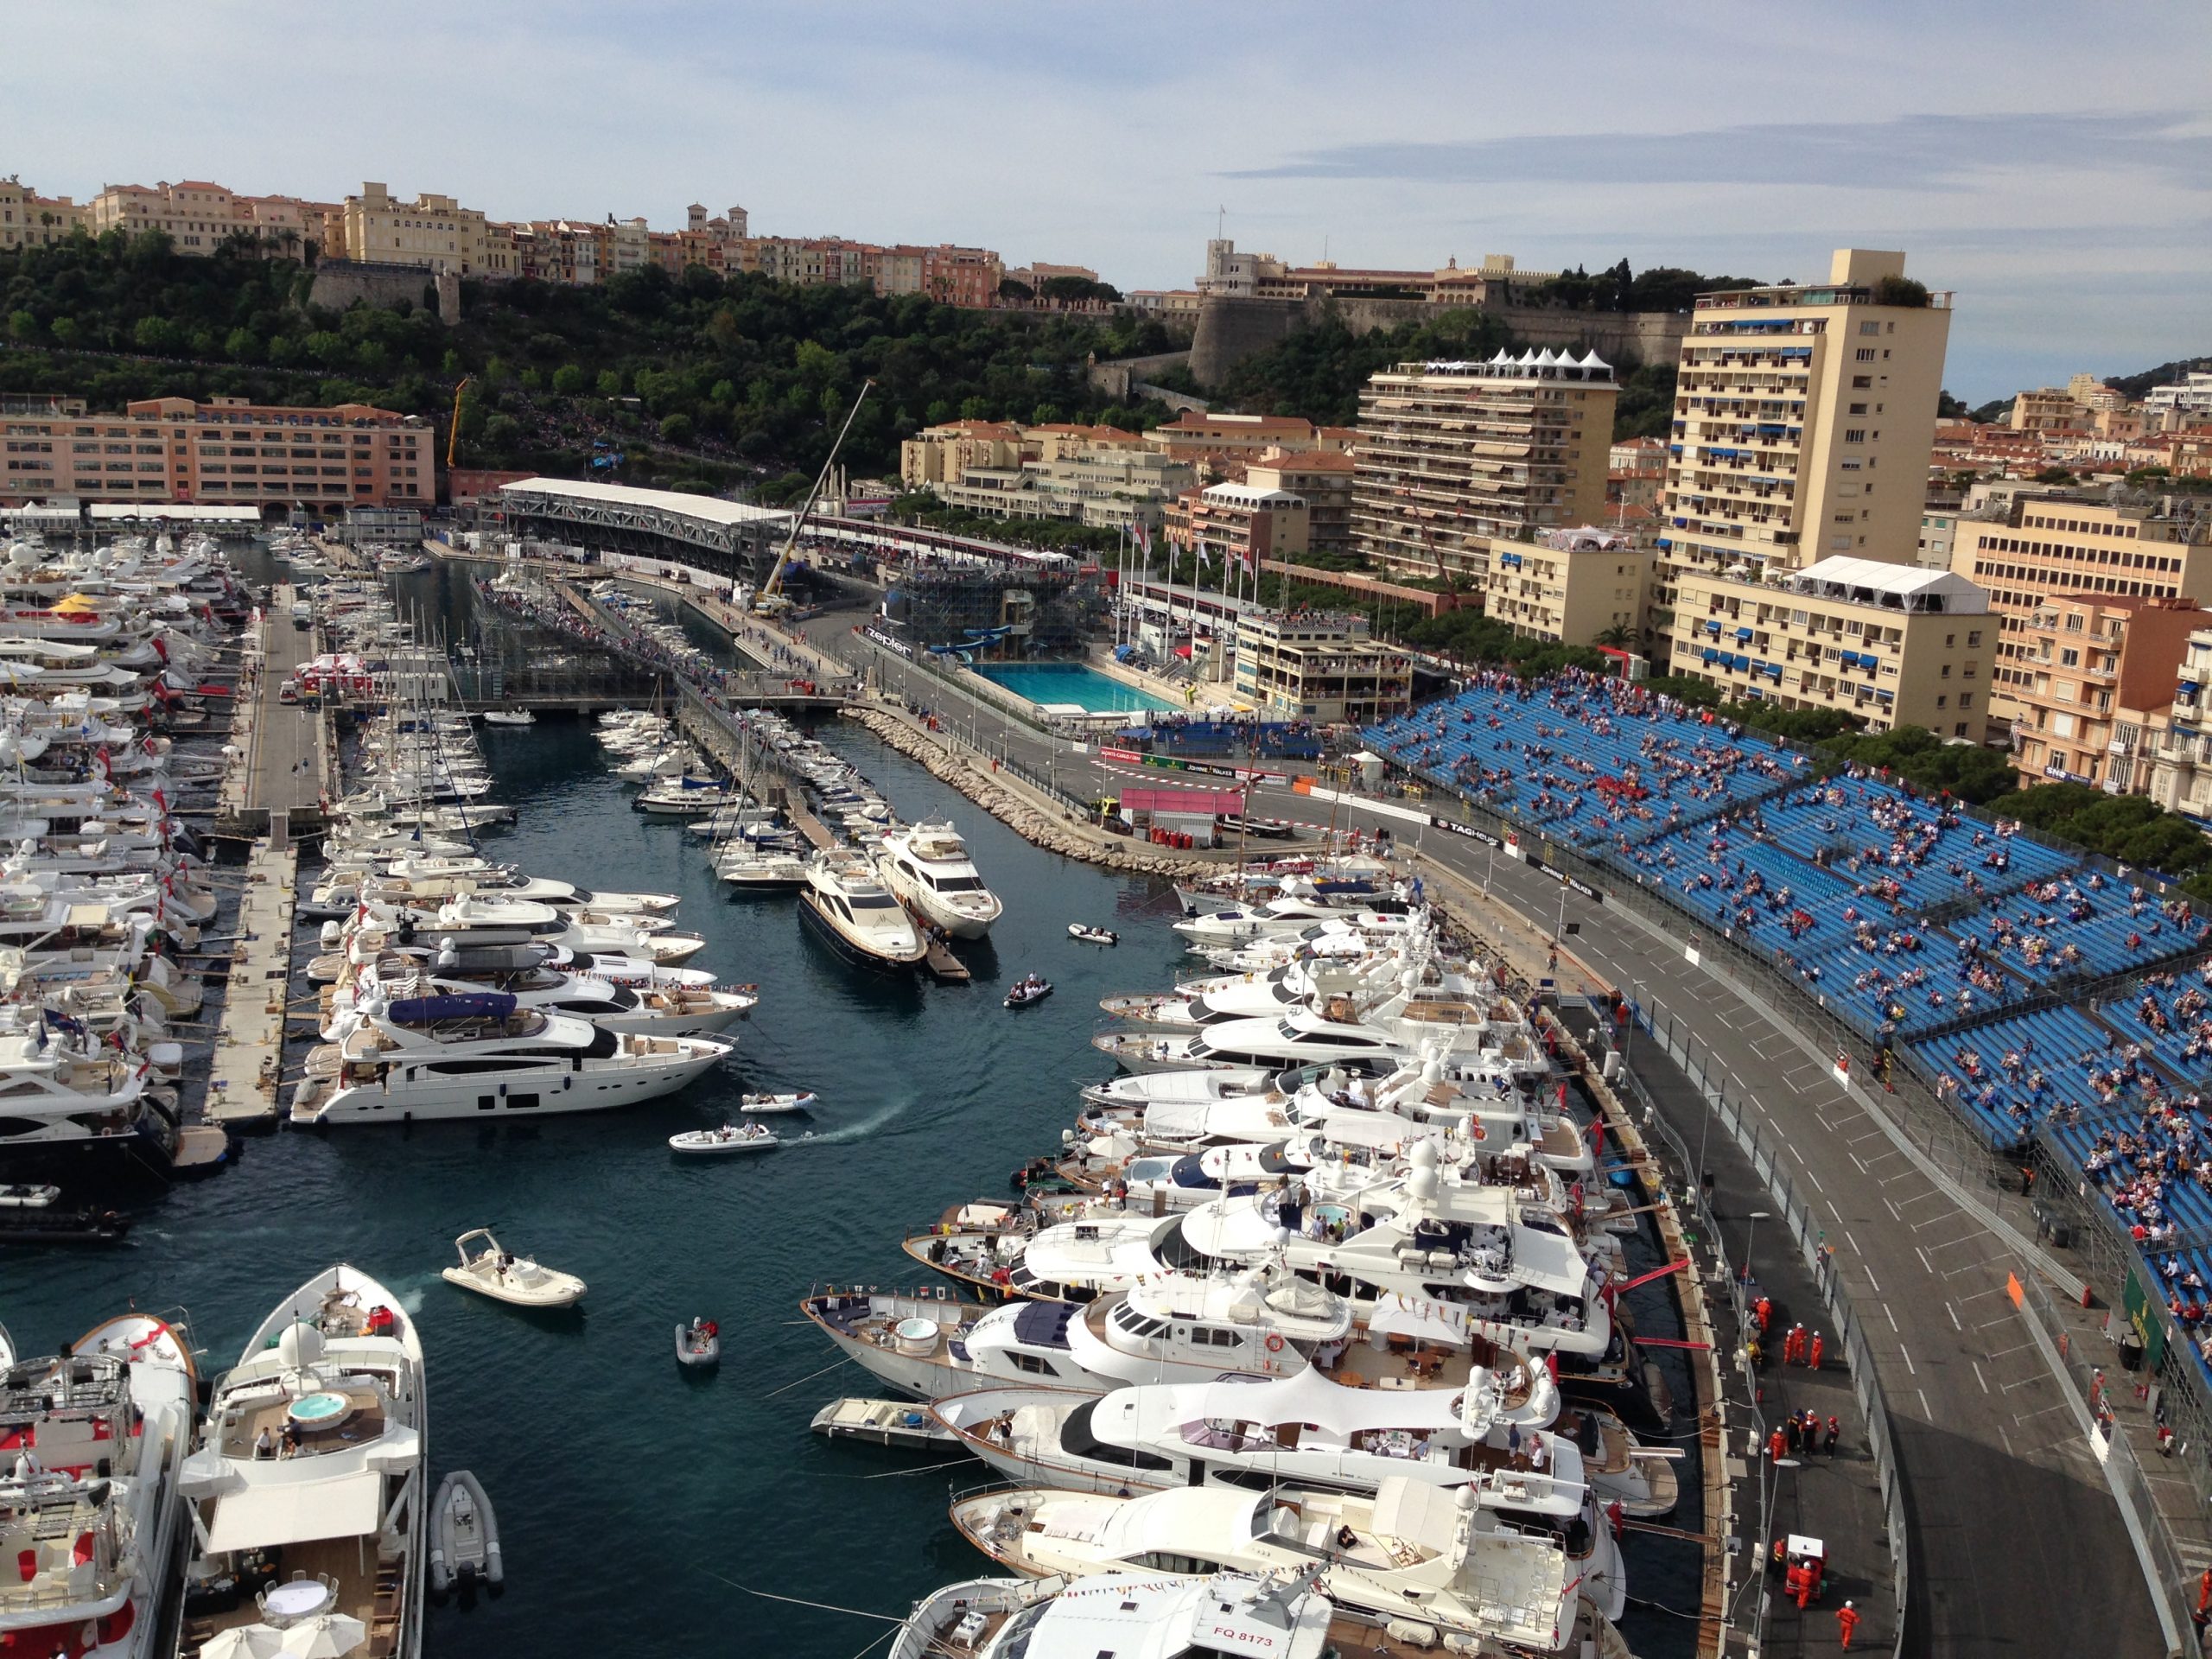 Monaco Relocation